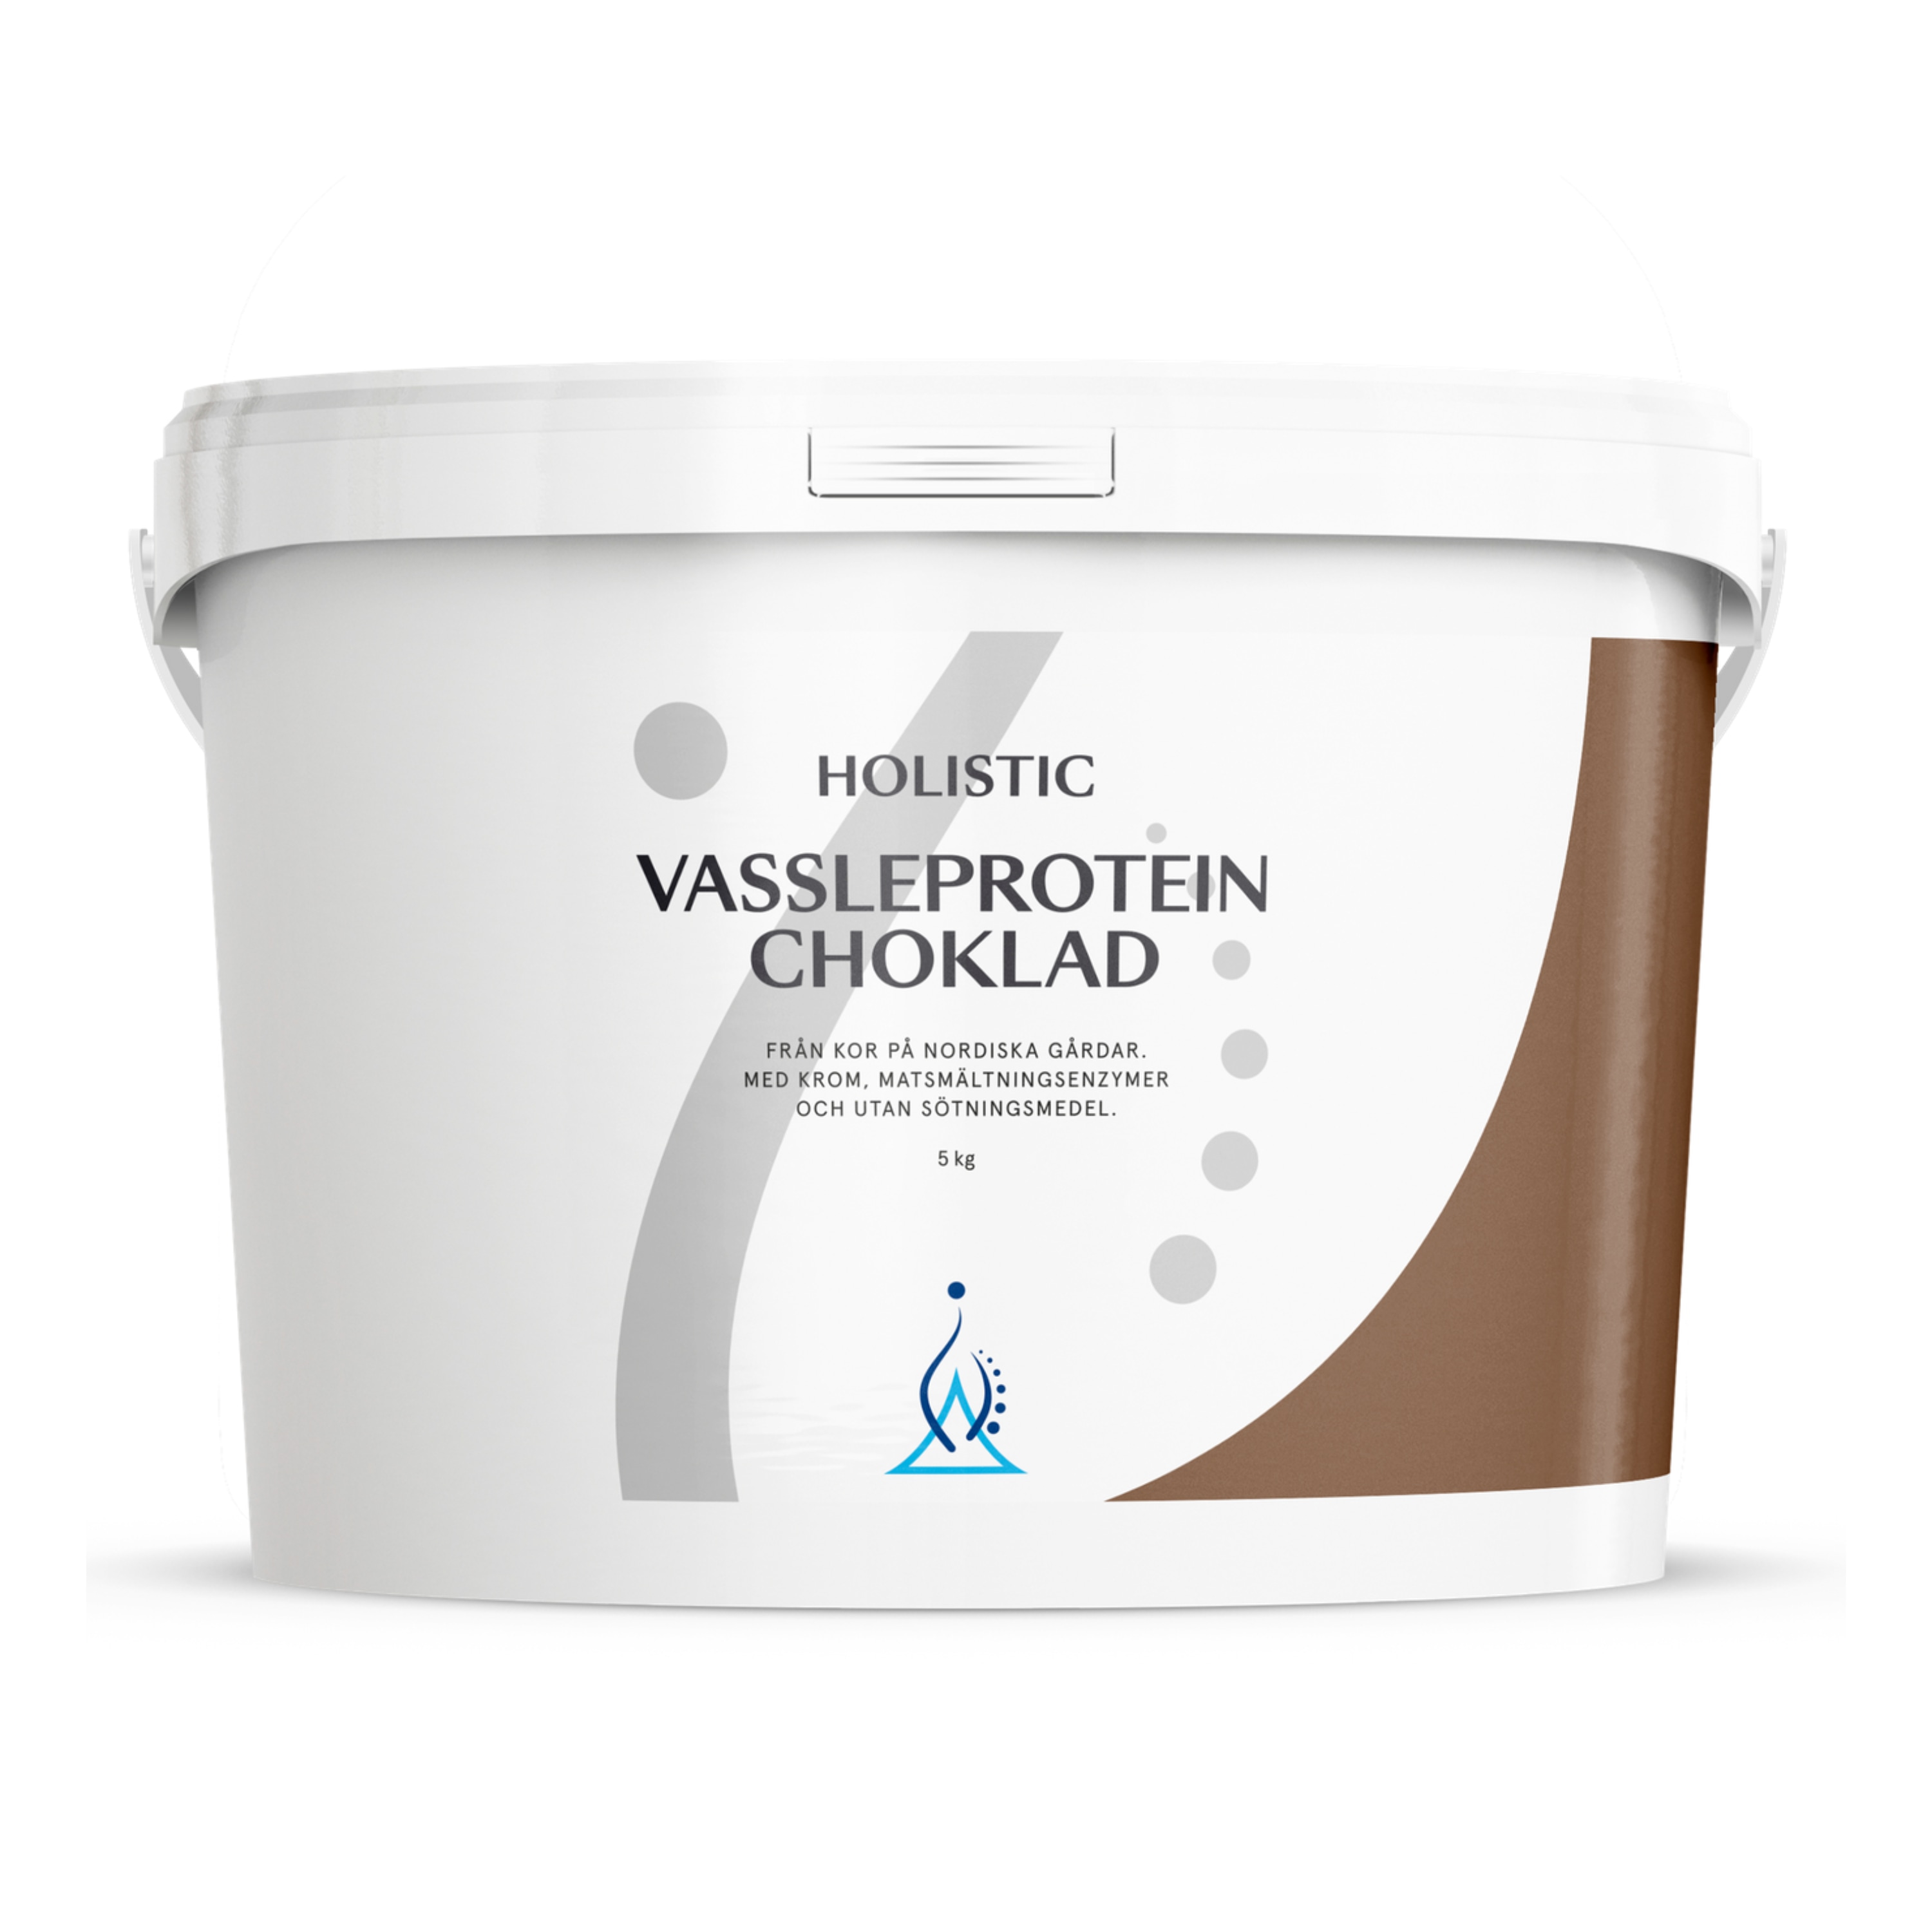 Vassleprotein Choklad 5kg